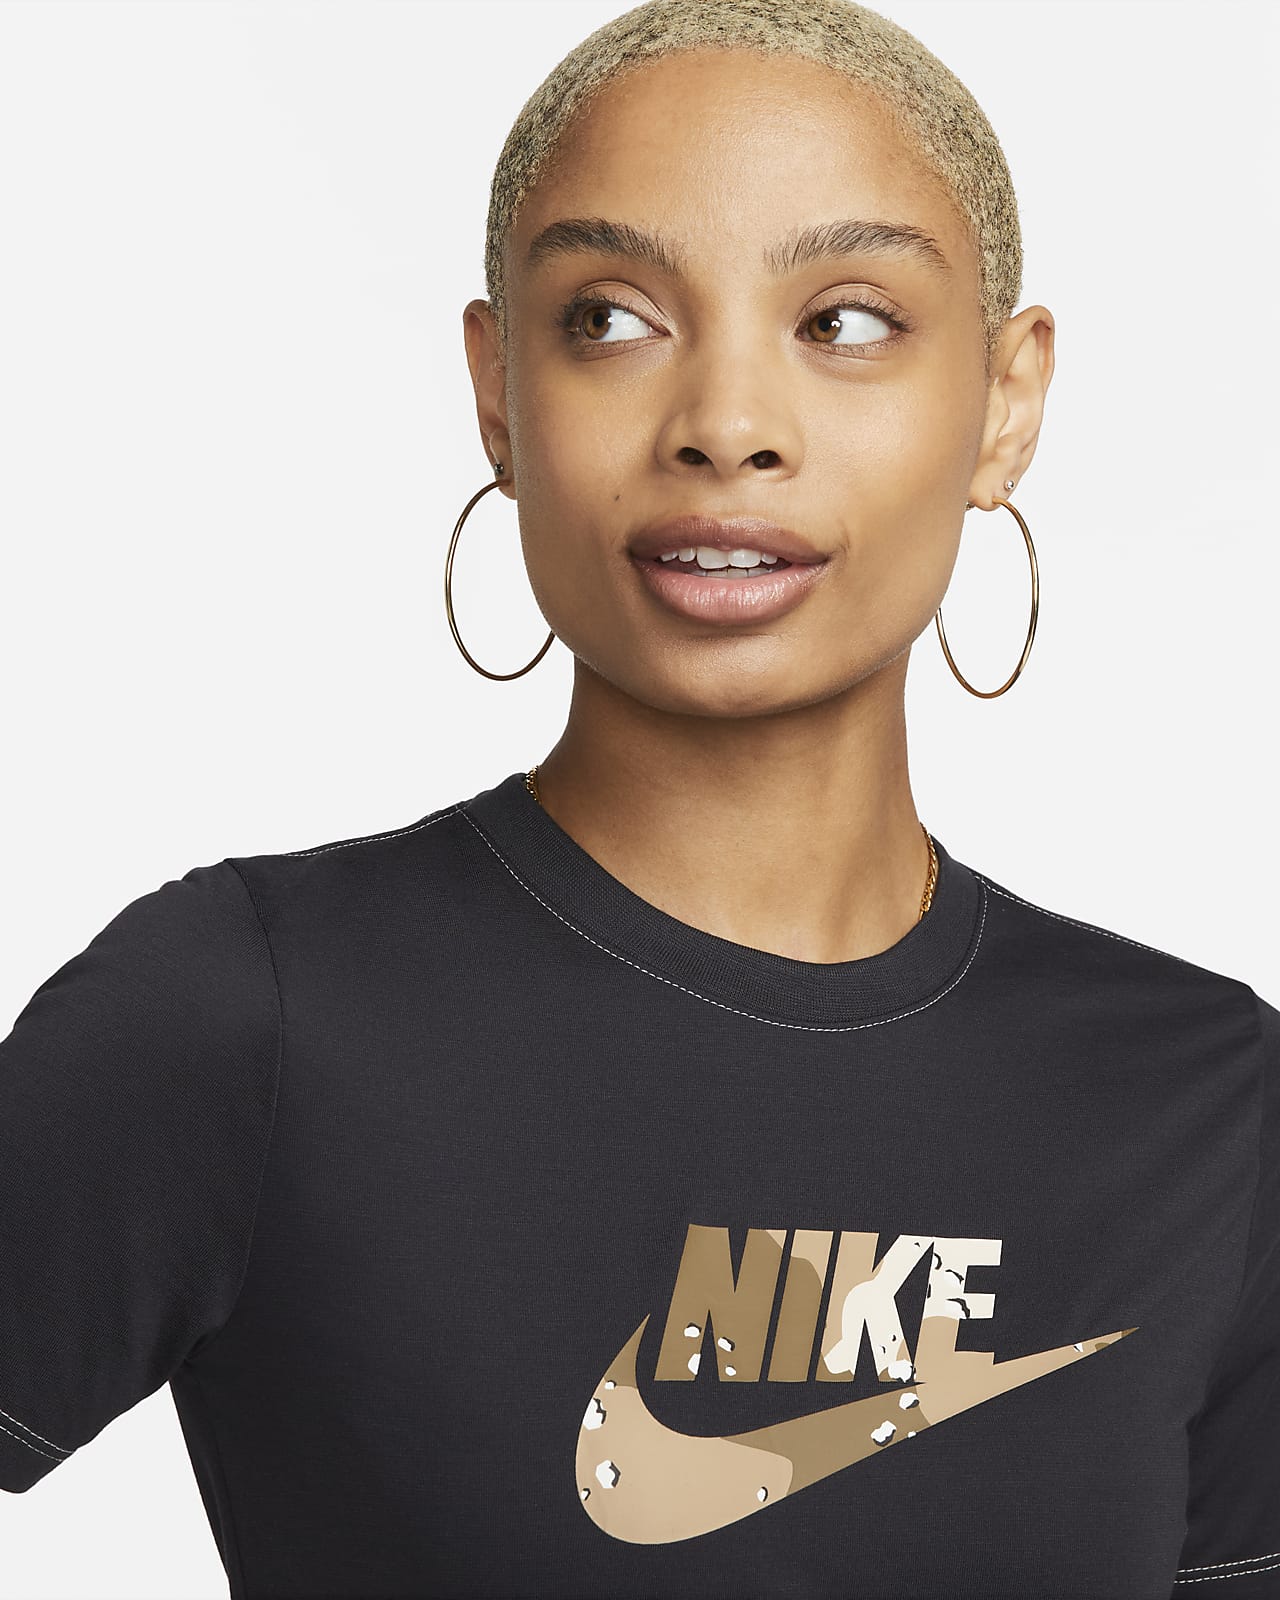 Nike Sportswear Women's Slim Fit Cropped T-Shirt. Nike.com